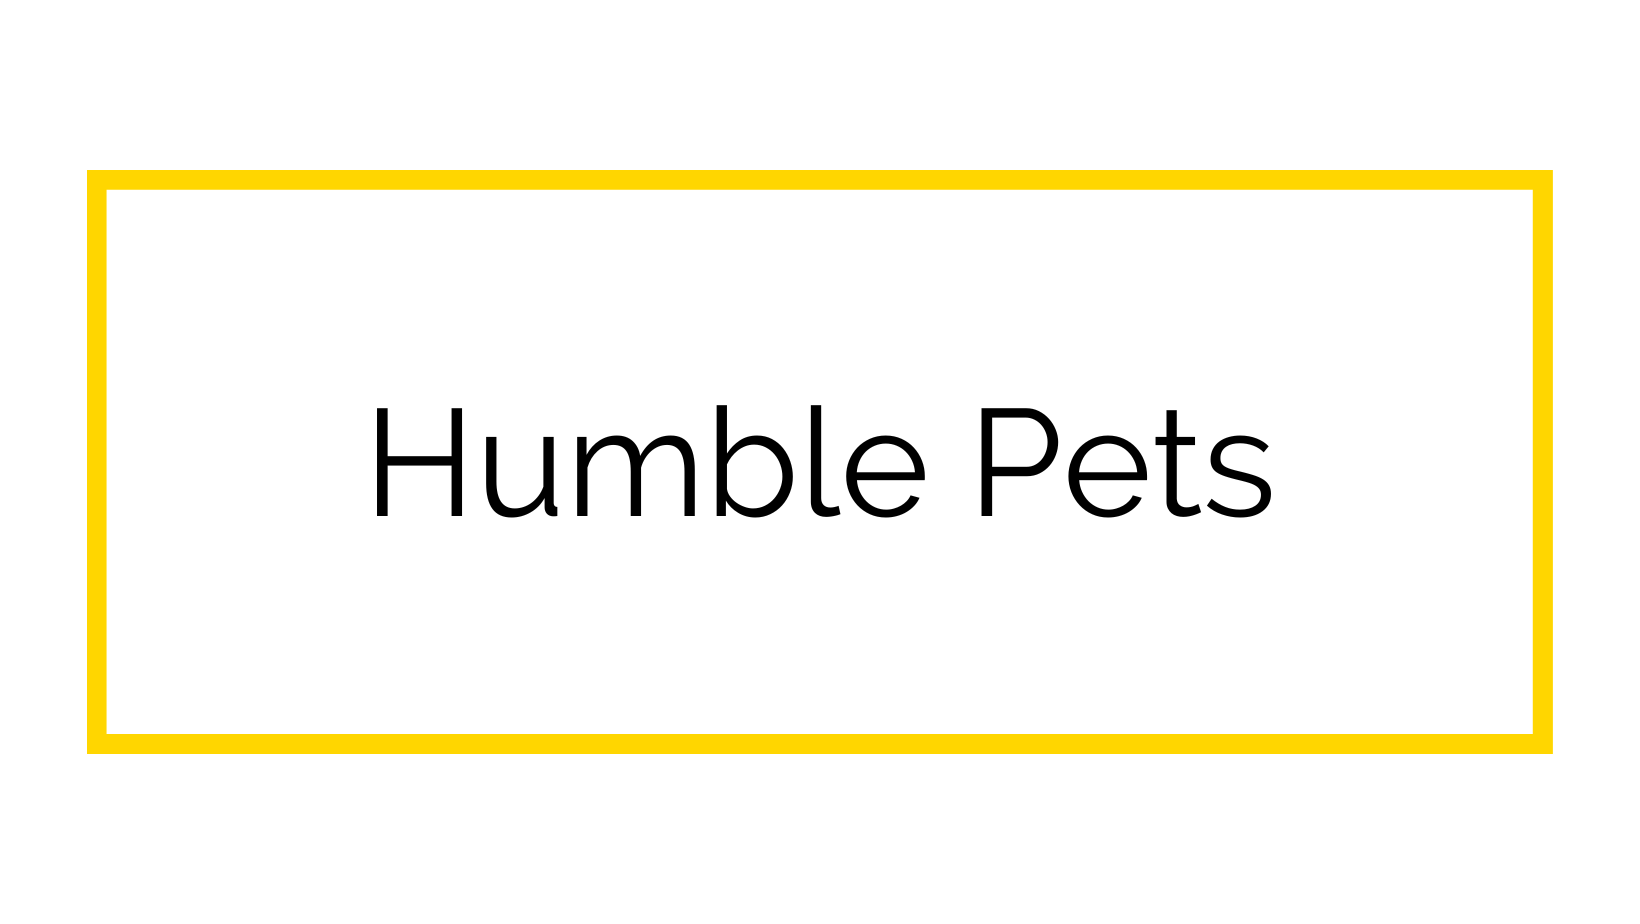 Humble Pets